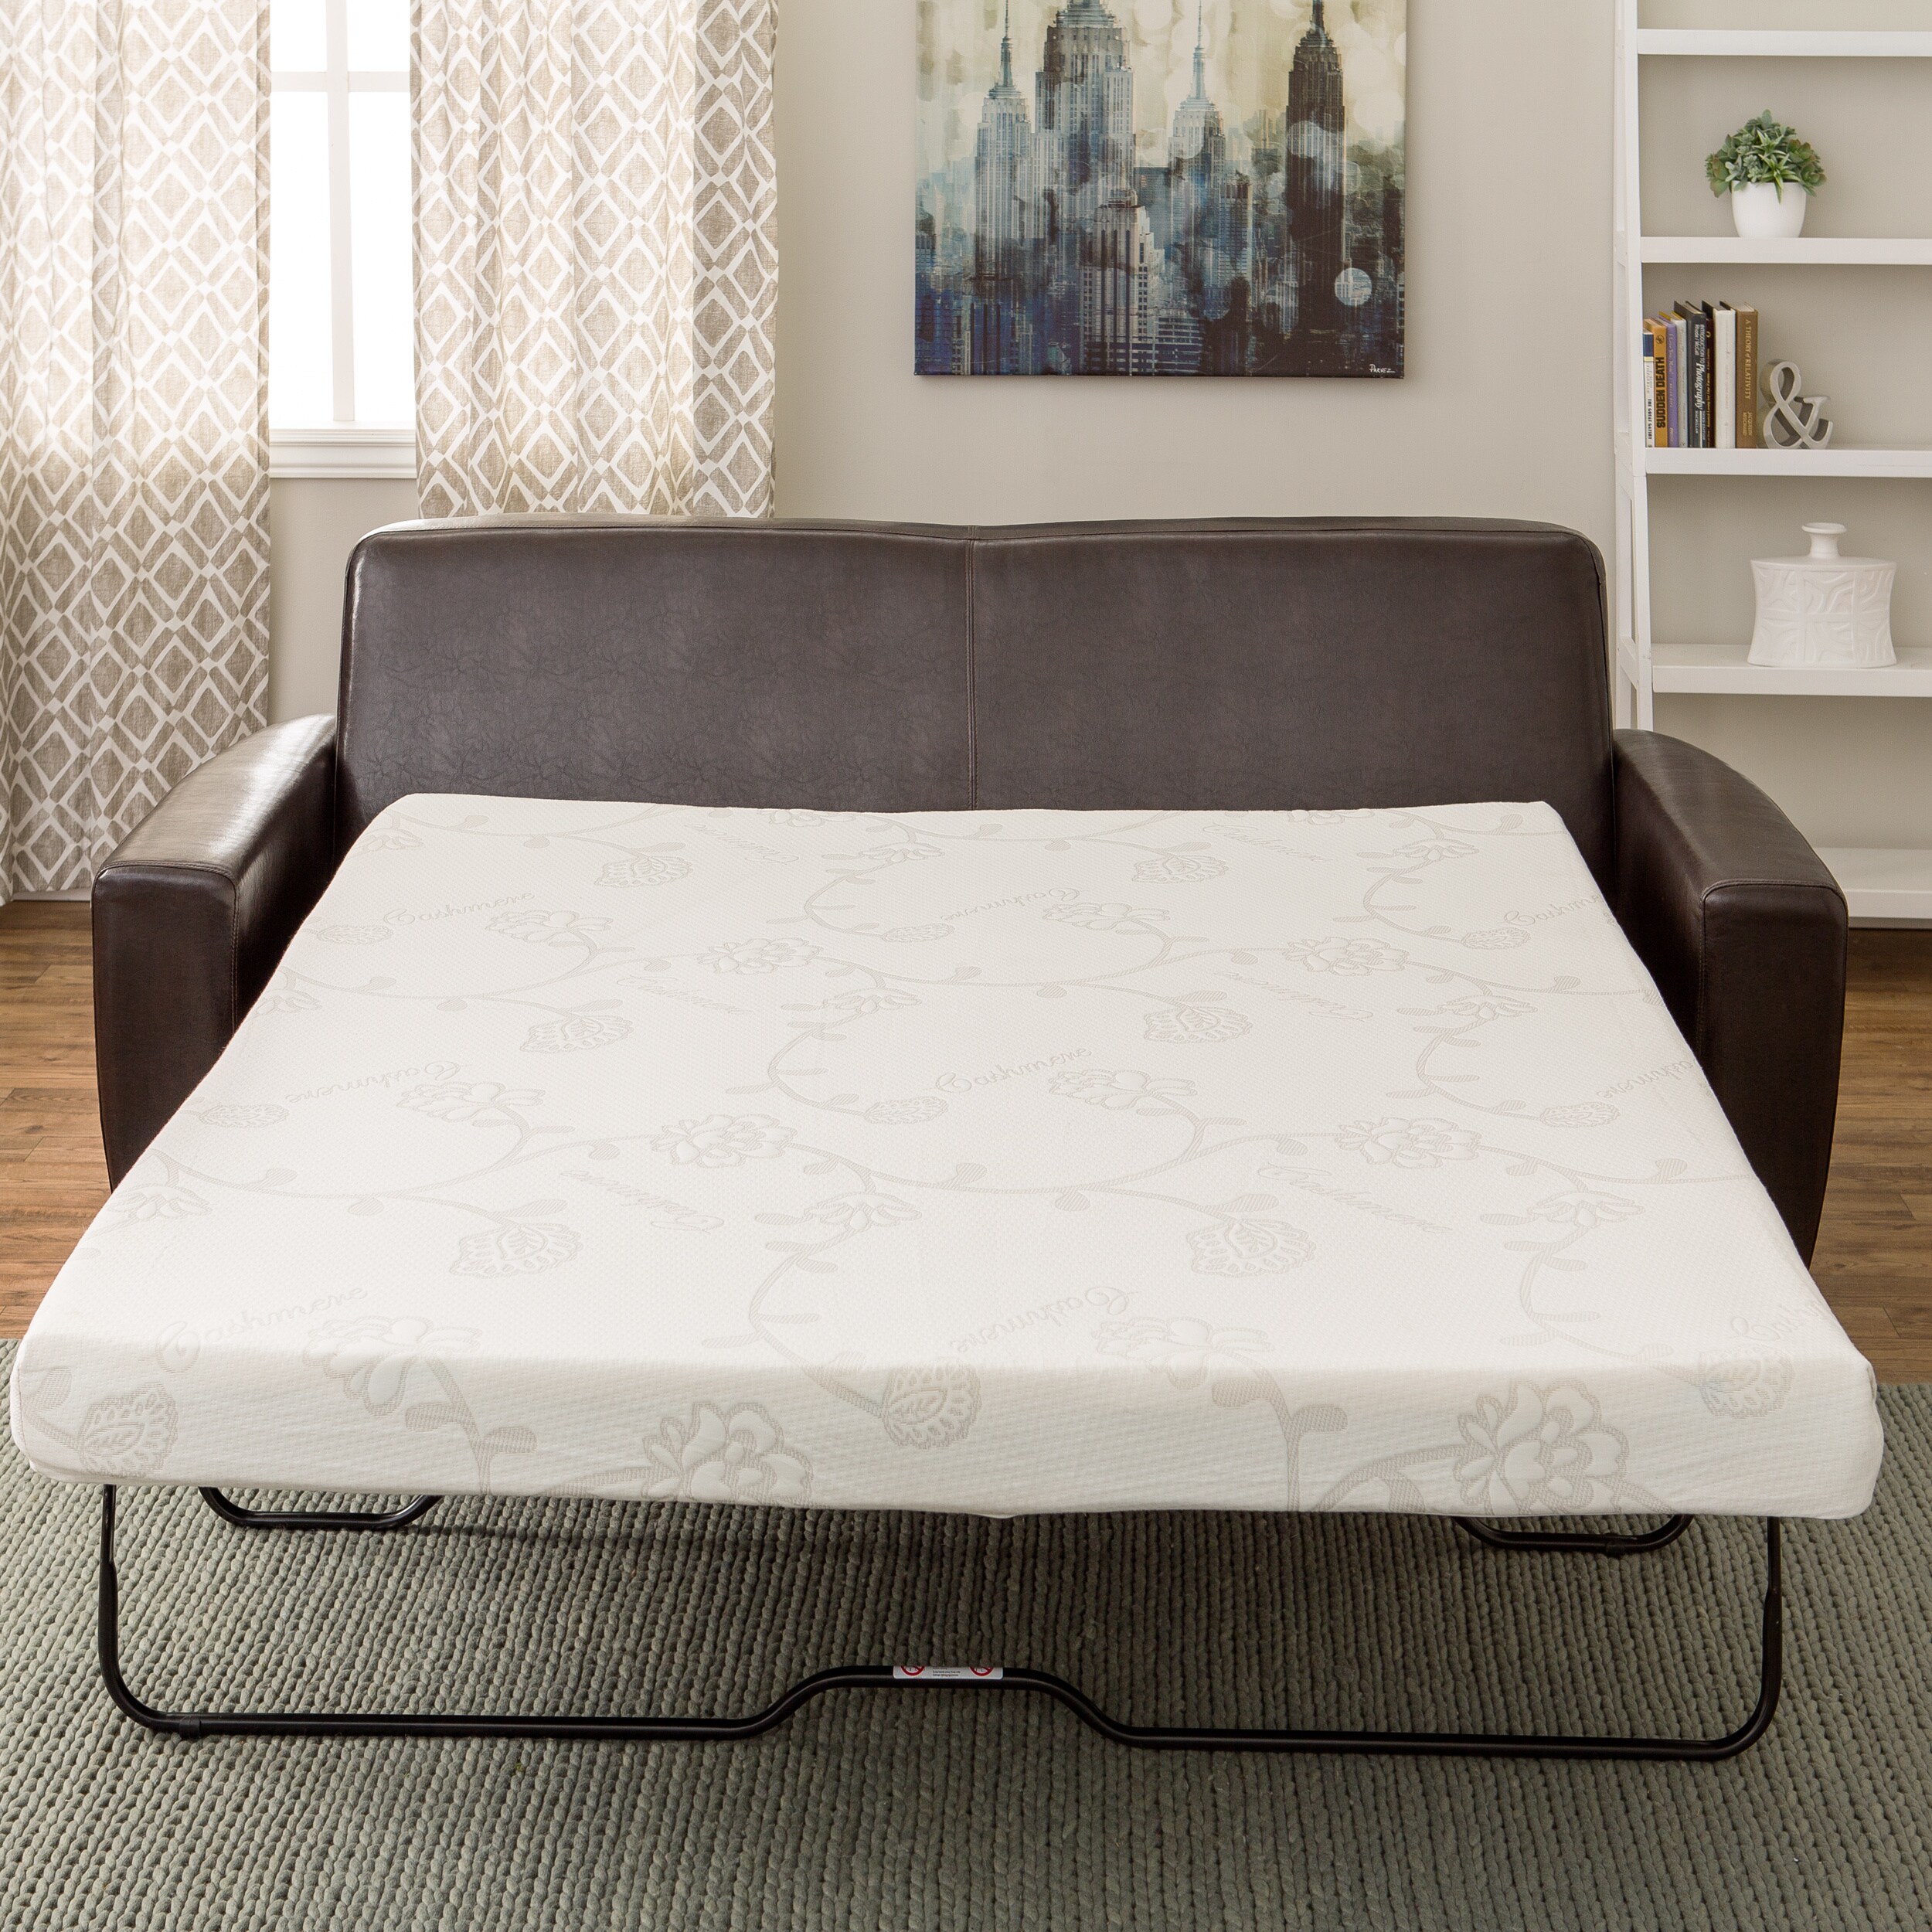 size memory foam sofa sleeper mattress compare $ 279 99 today $ 199